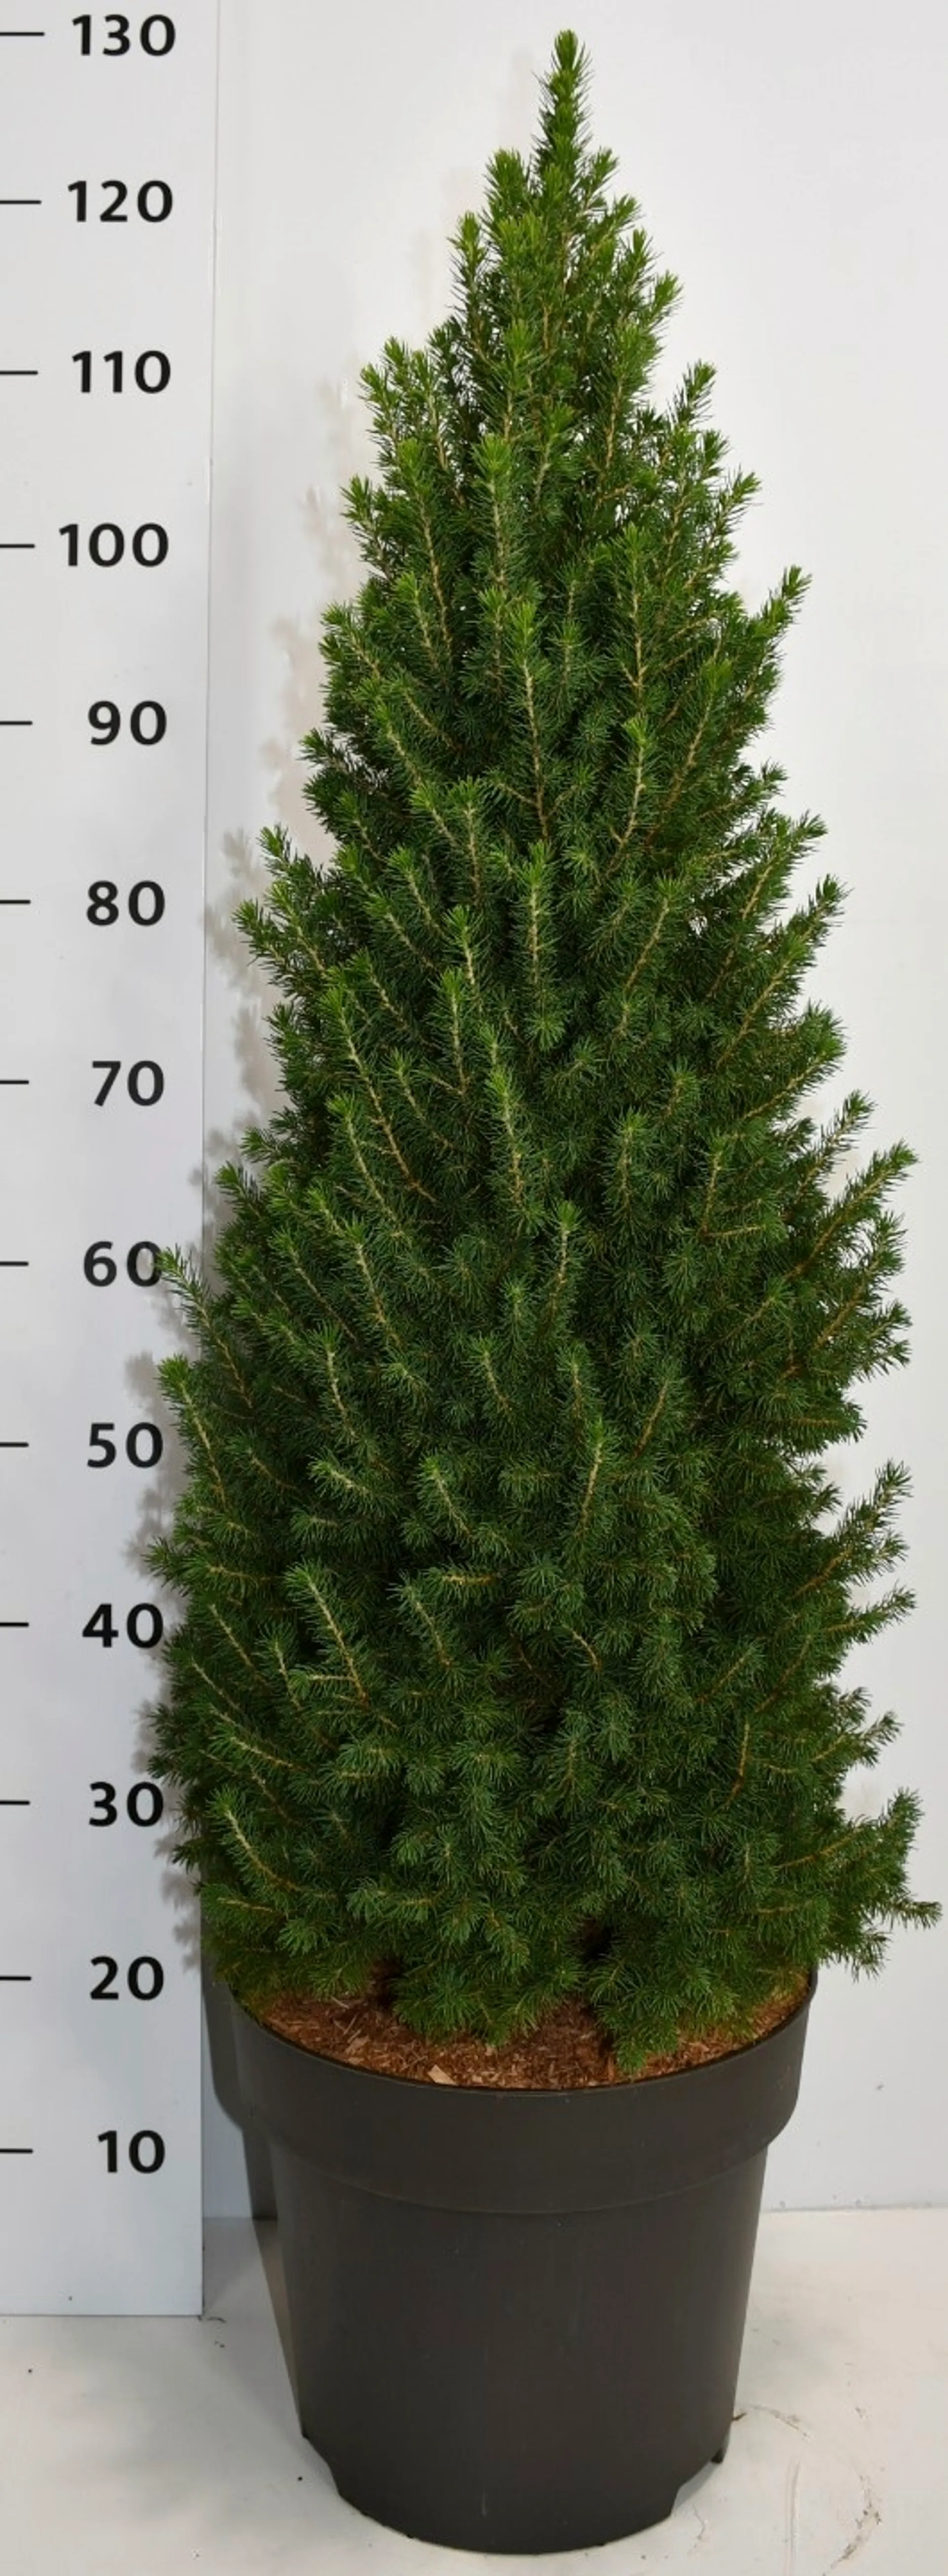 Kartiovalkokuusi 'Perfecta' 90-100 cm astiataimi 12 l ruukku Picea glauca 'Perfecta'